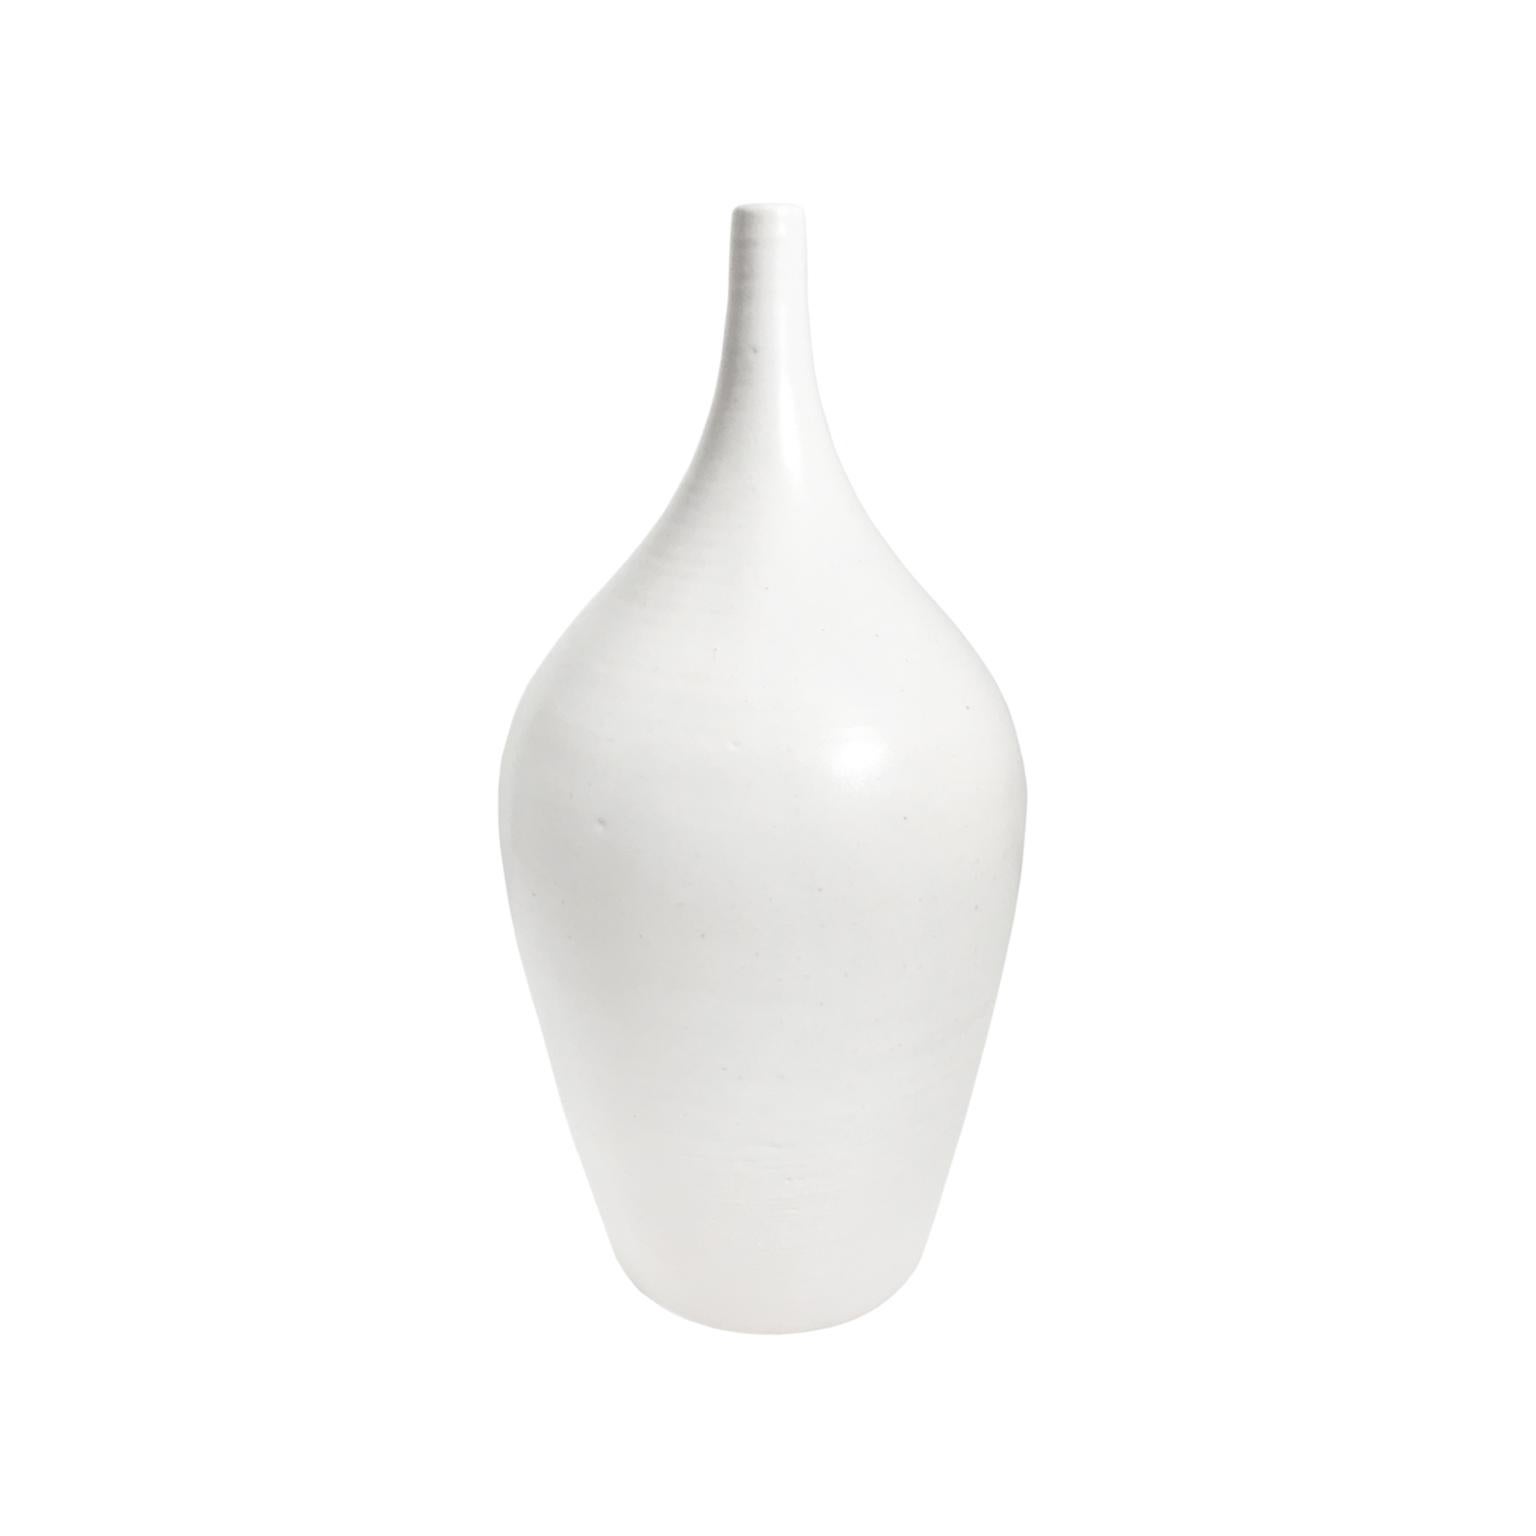 Alabaster Glaze Ceramic Bottle #3 by Sandi Fellman